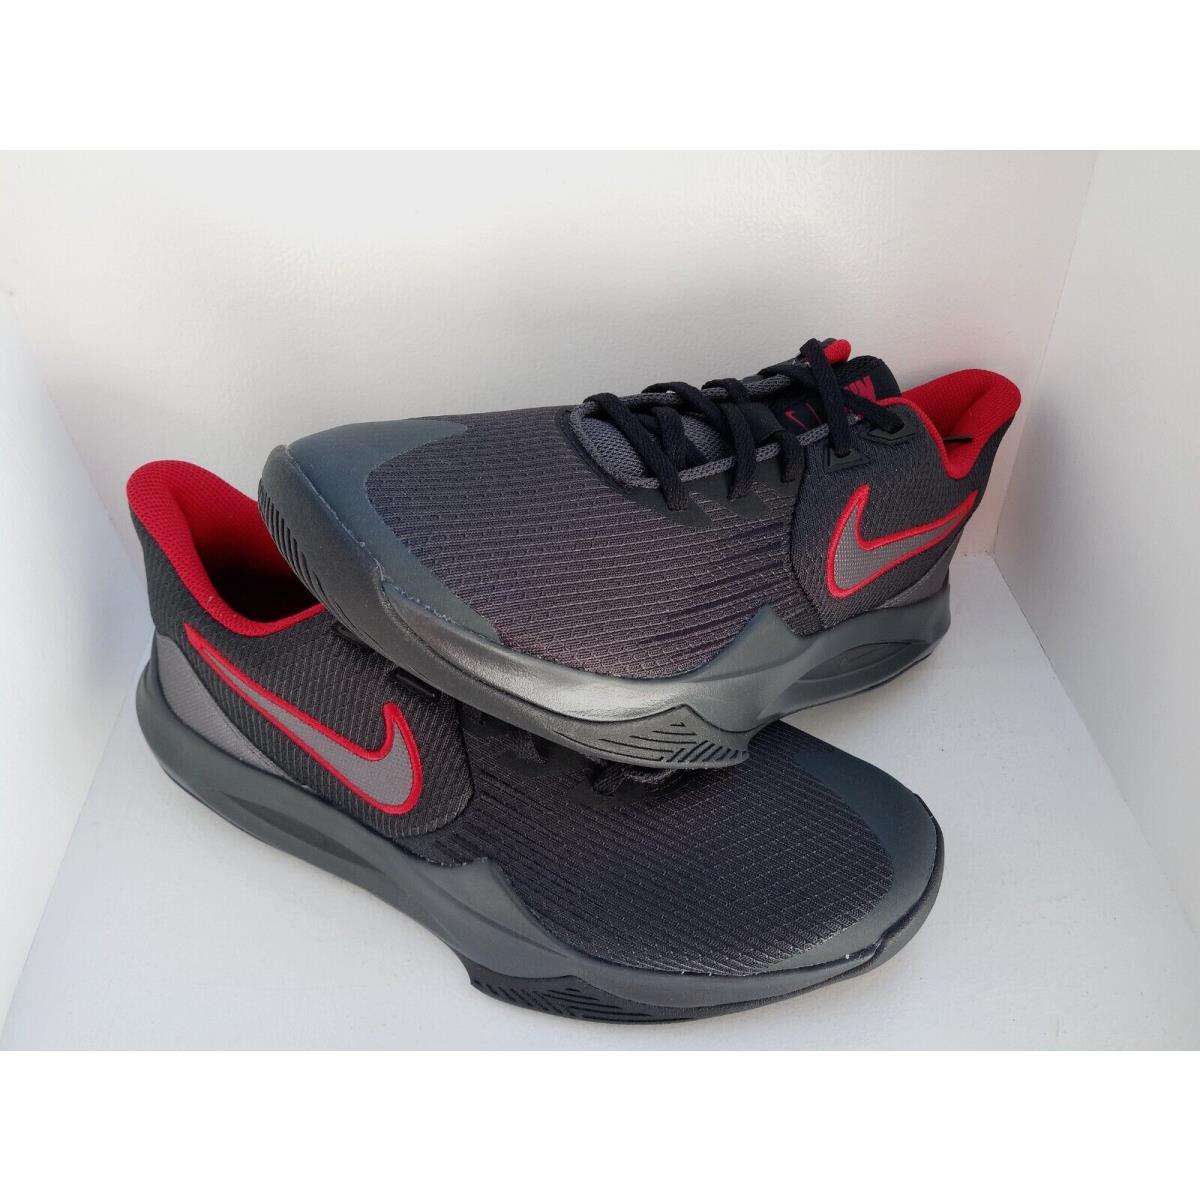 Nike shoes Precision - ANTHRACITE/MTLC DARK GREY 4